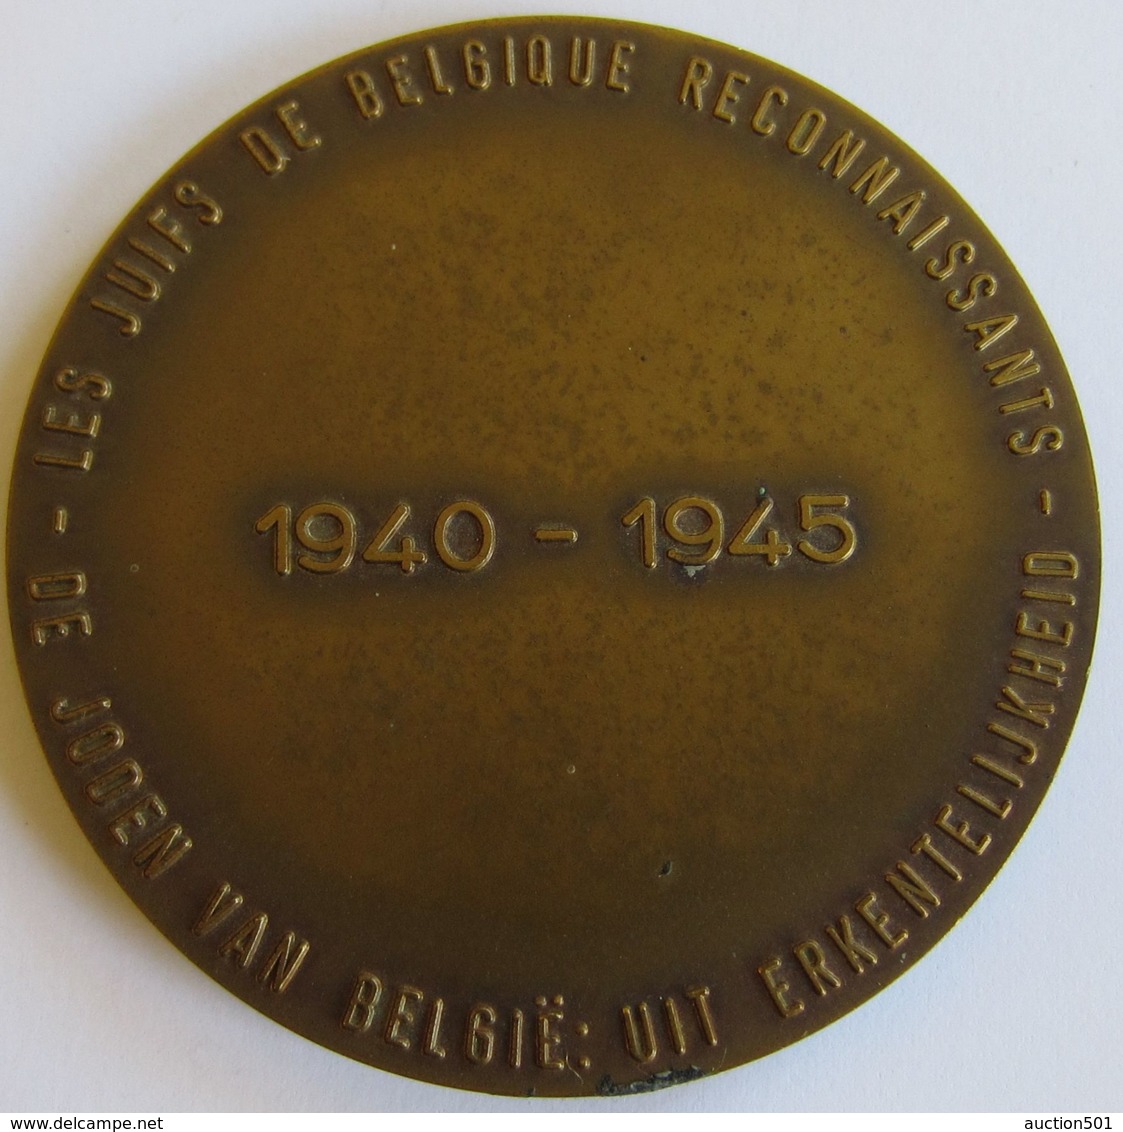 M02078  LES JUIFS DE BELGIQUE RECONNAISSANTS 1940-1945  (84 G) - Professionali / Di Società